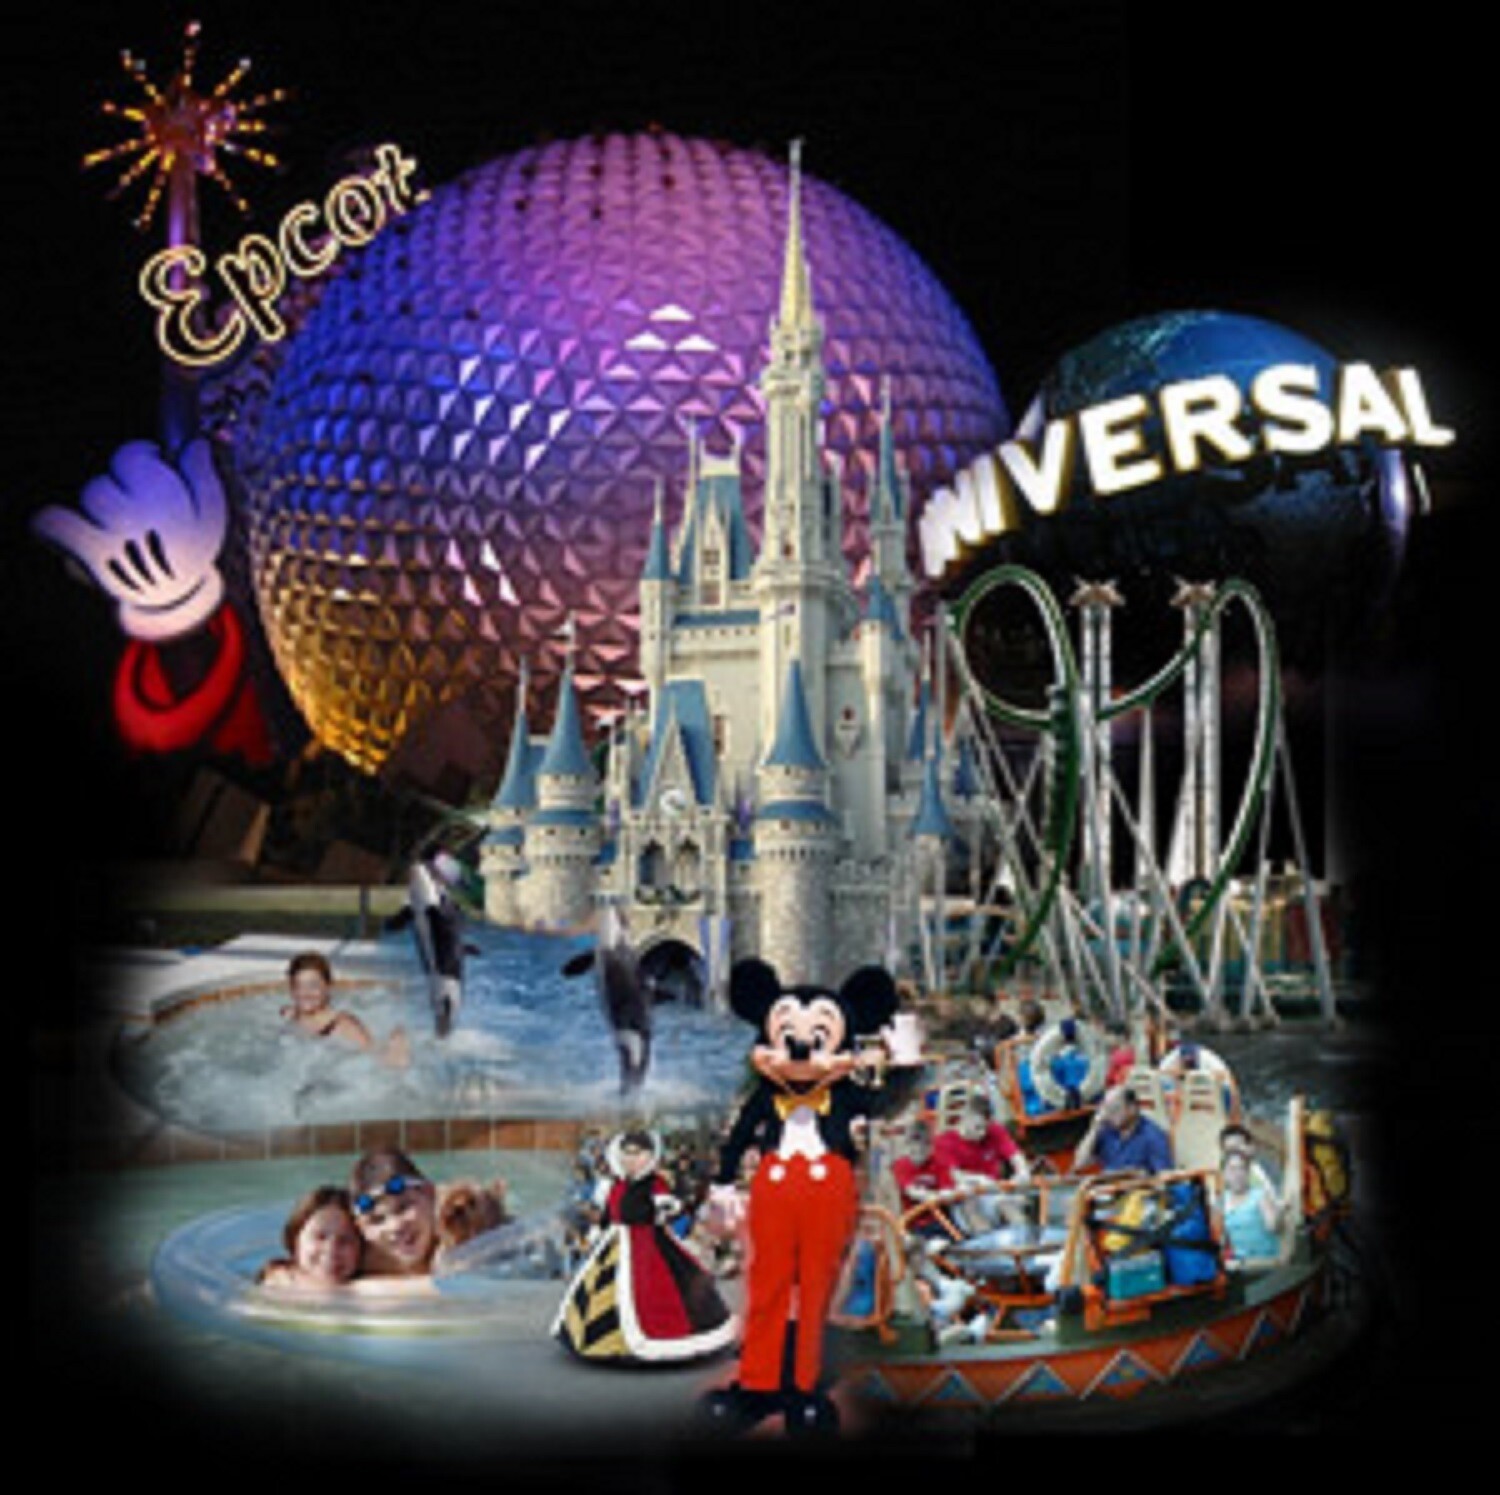 Orlando Vacation Package
3 Days 2 nights minutes from Walt Disney World, Universal Studios, Sea World & Lego land Theme Parks